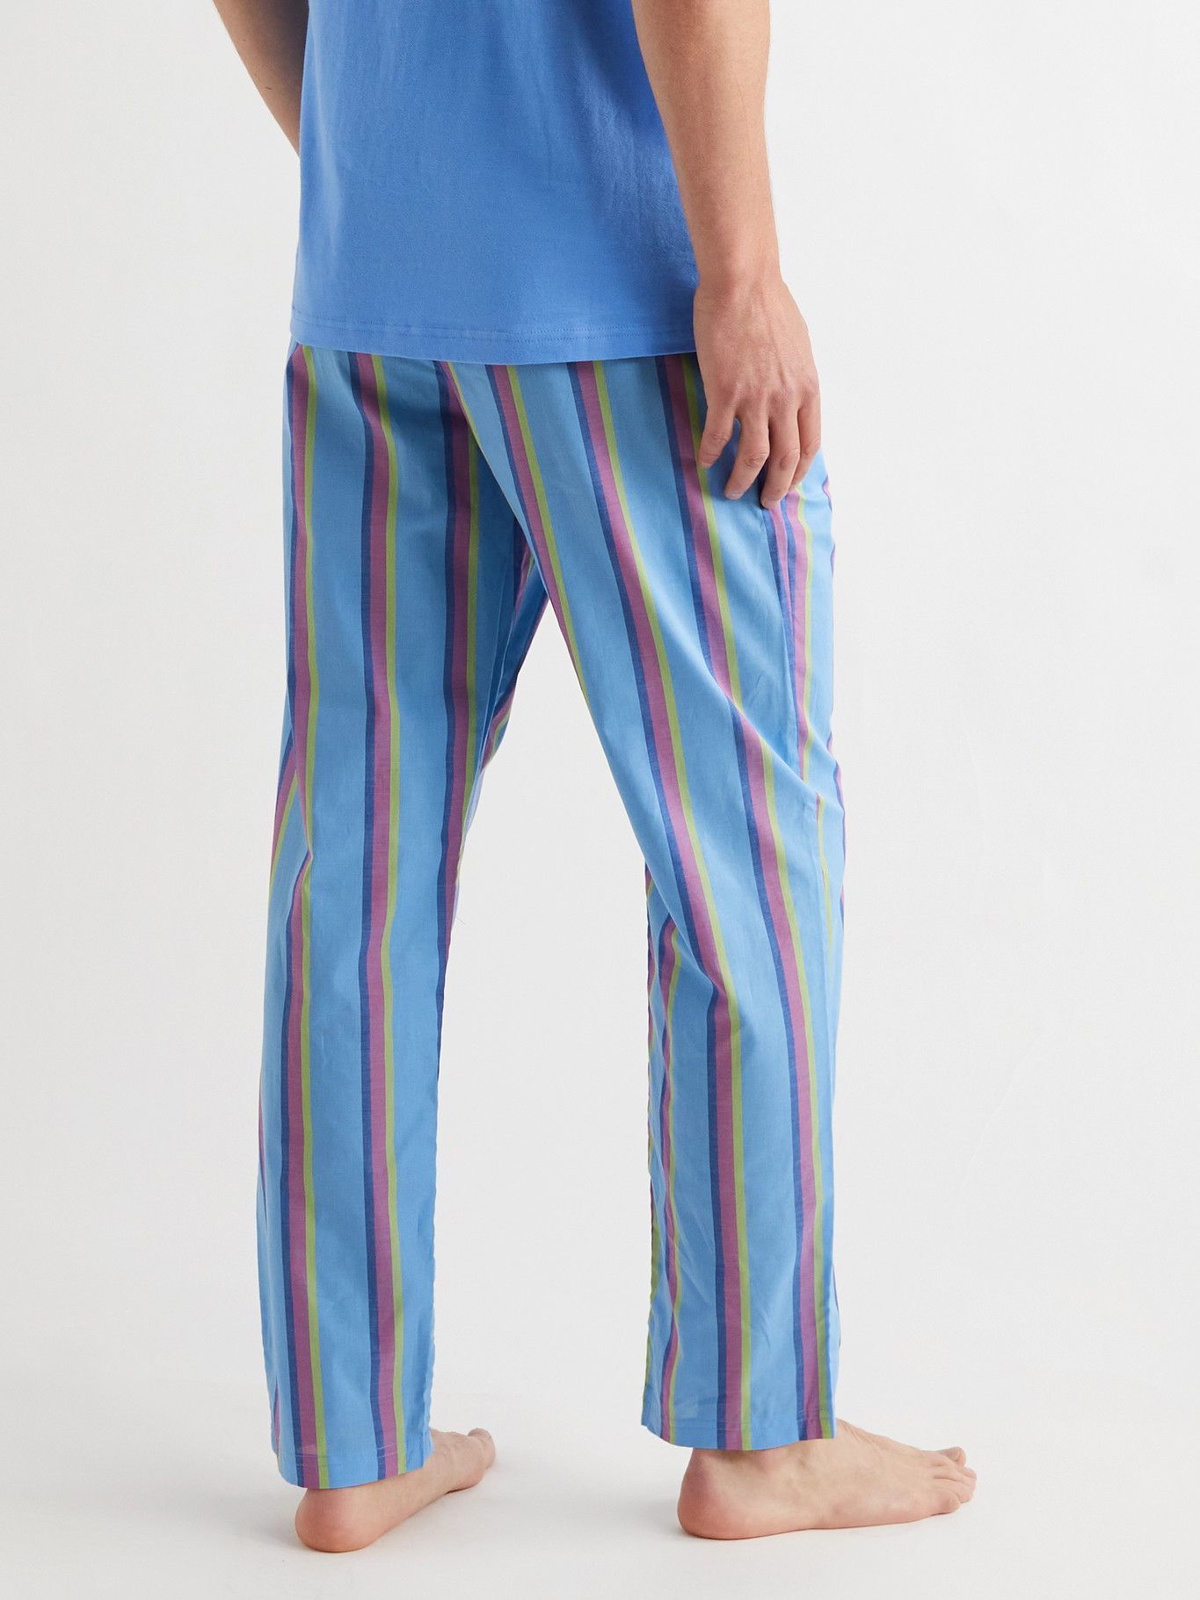 Calvin Klein Stripe Pyjama Bottoms | Pyjama bottoms, Striped pyjamas, Calvin  klein pyjamas